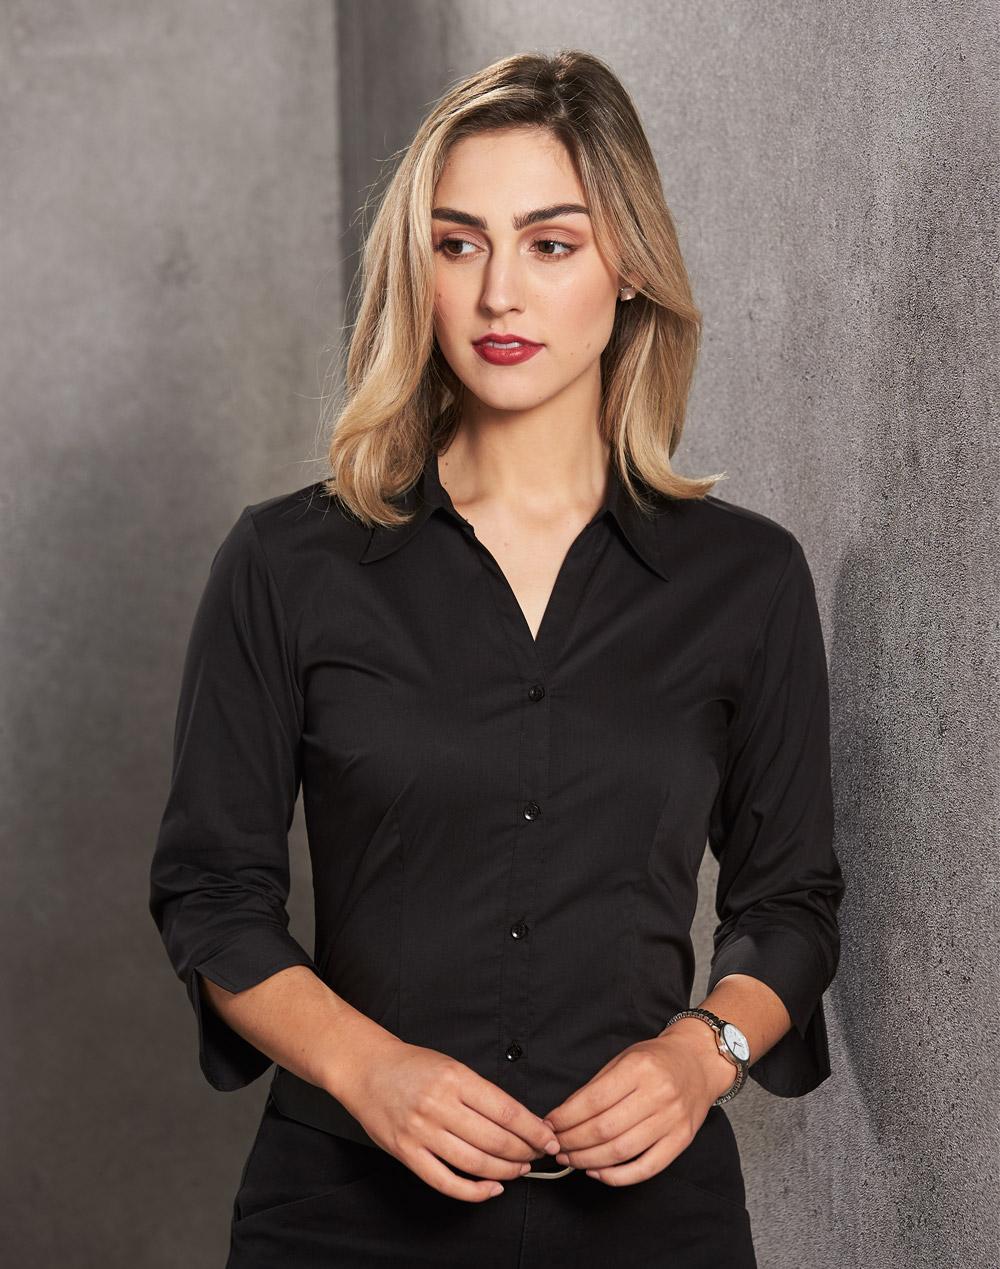 Benchmark BS07Q Women's Teflon Executive 3/4 Sleeve Shirt